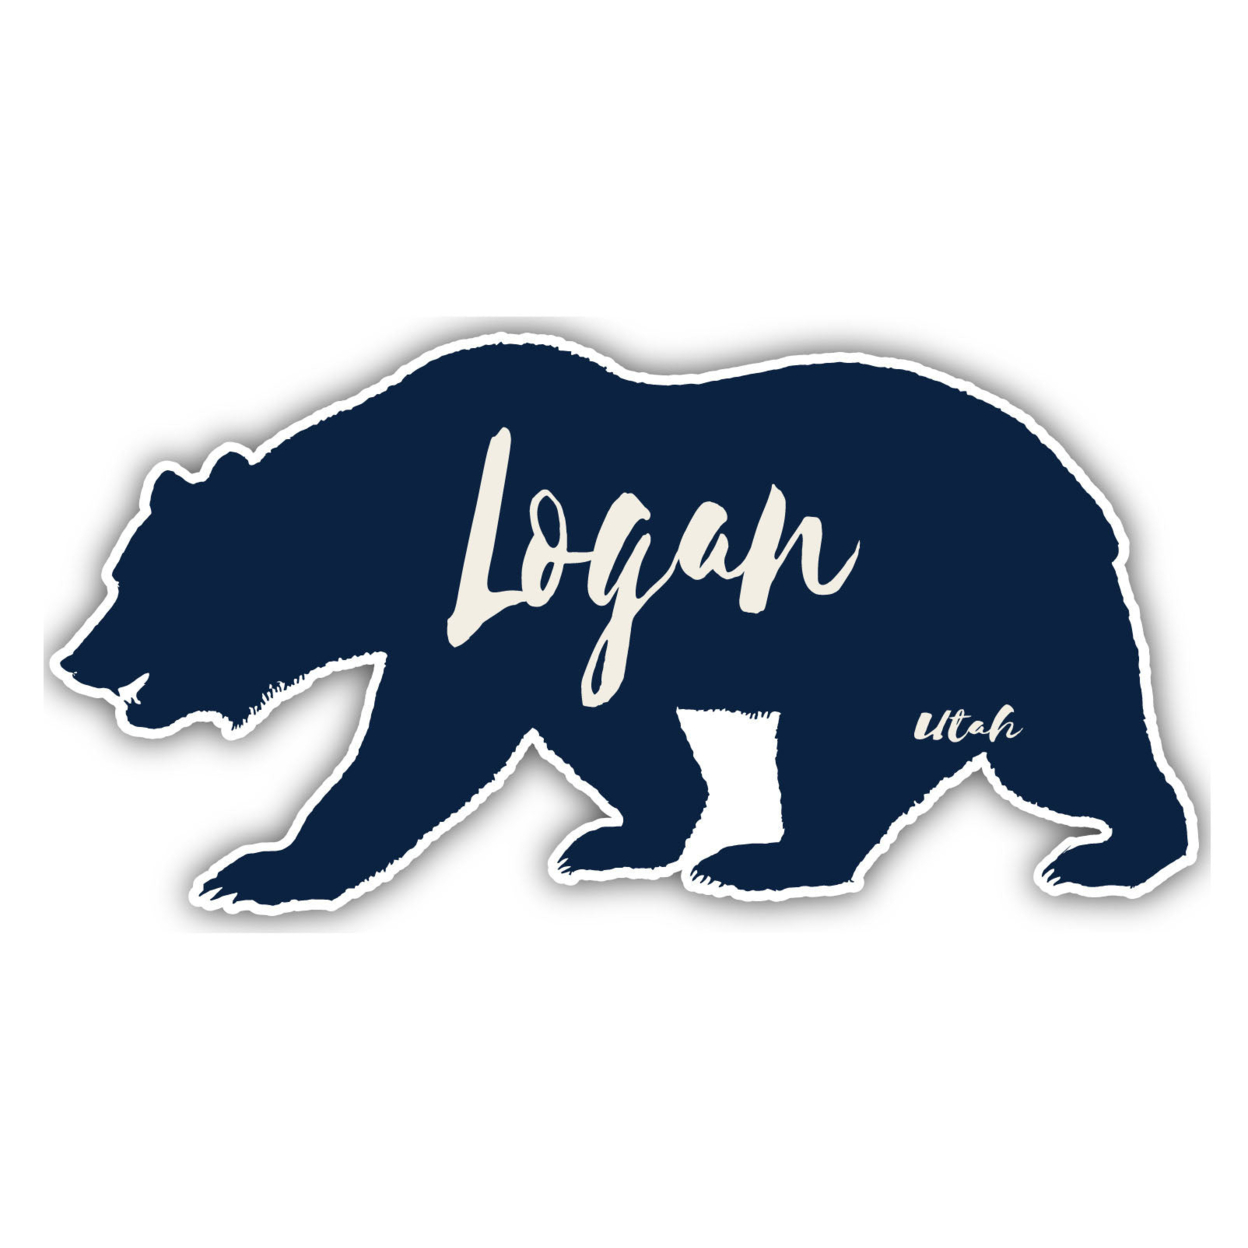 Logan Utah Souvenir Decorative Stickers (Choose Theme And Size) - 4-Inch, Tent